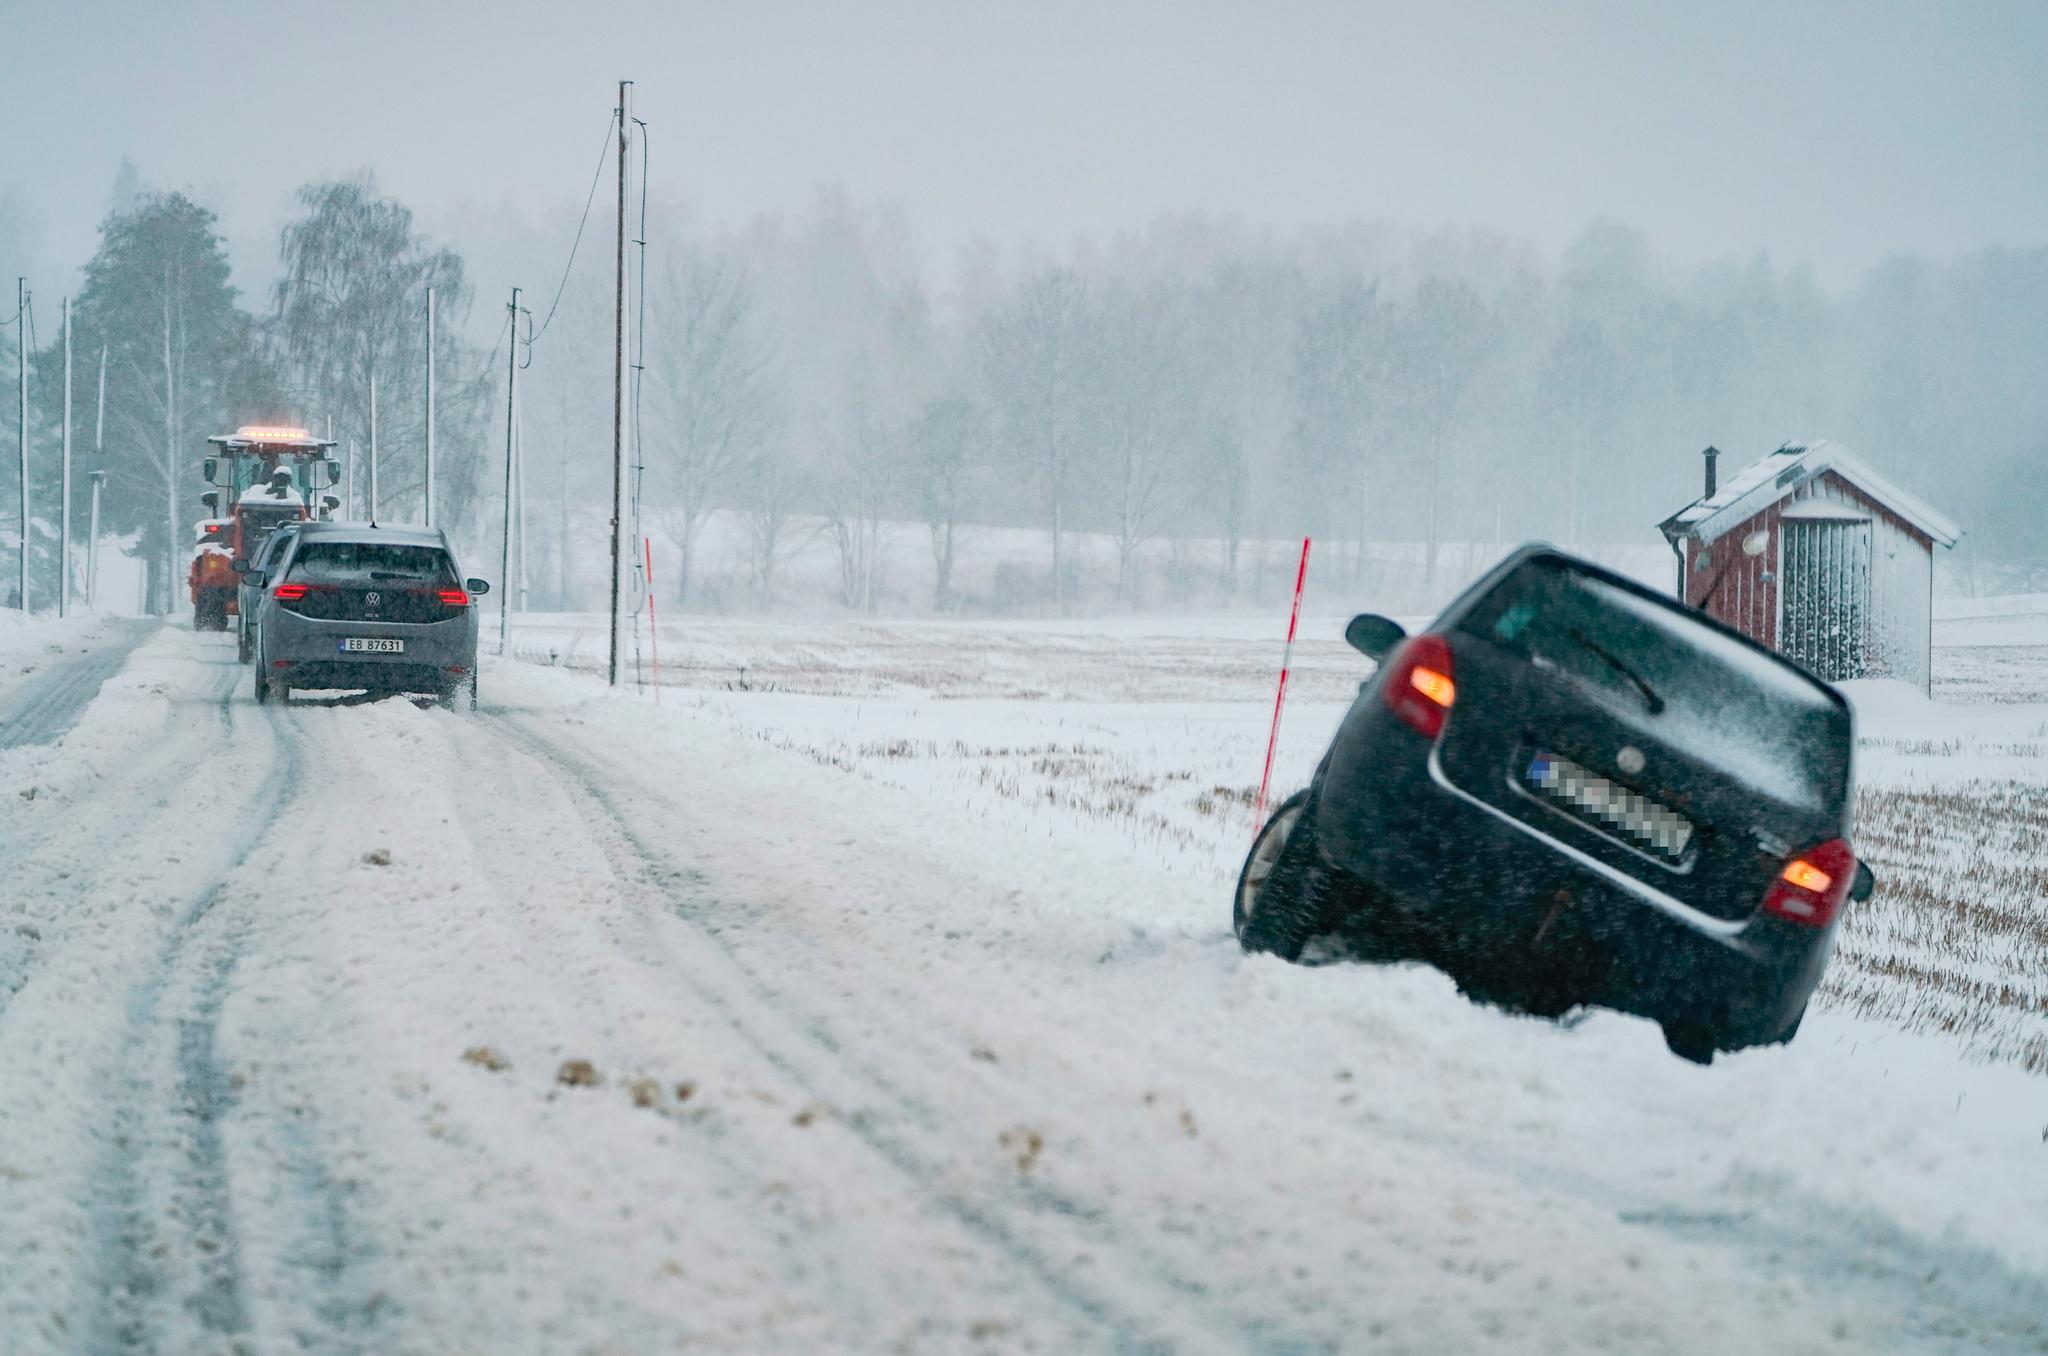 Tirsdagens snøvær skapte trafikkproblemer flere steder på Østlandet, blant annet på Fv454 i Ullensaker. 